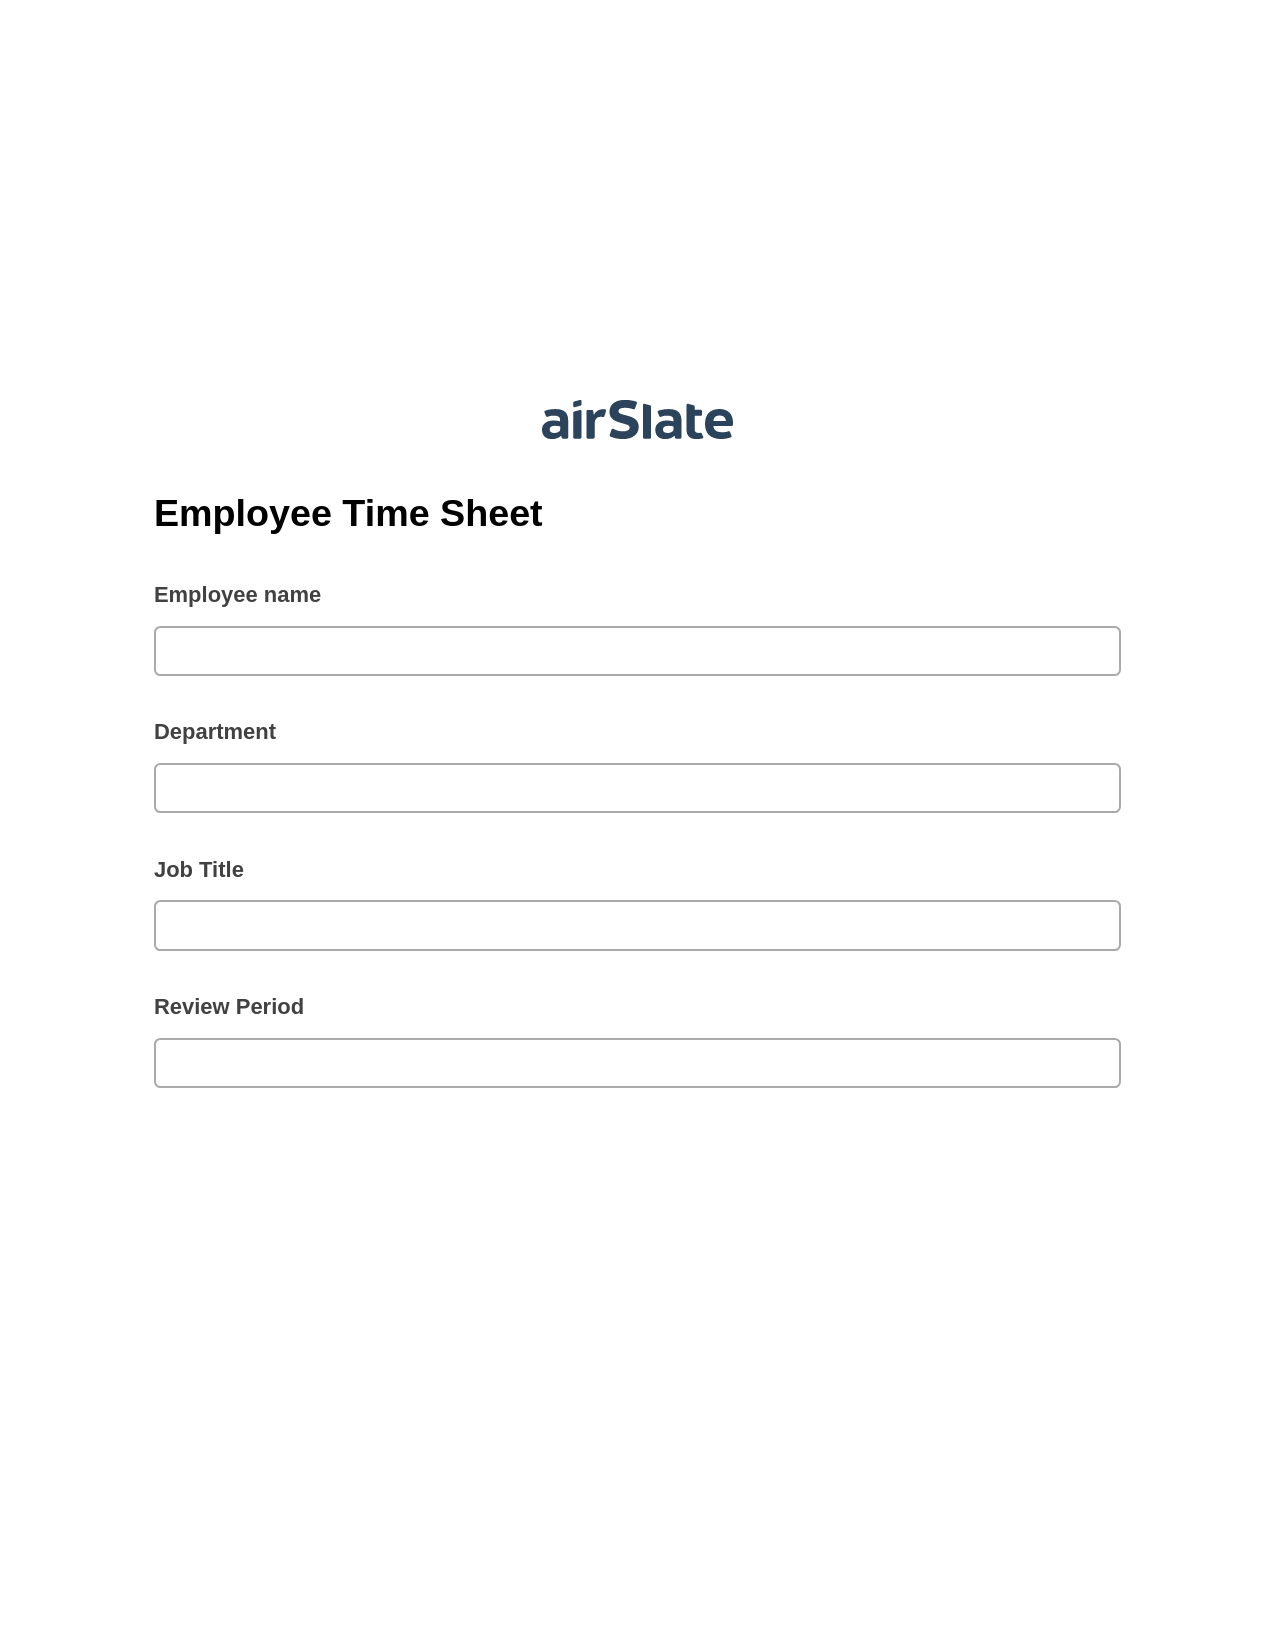 Multirole Employee Time Sheet Prefill from NetSuite records, Create slate addon, Export to Google Sheet Bot